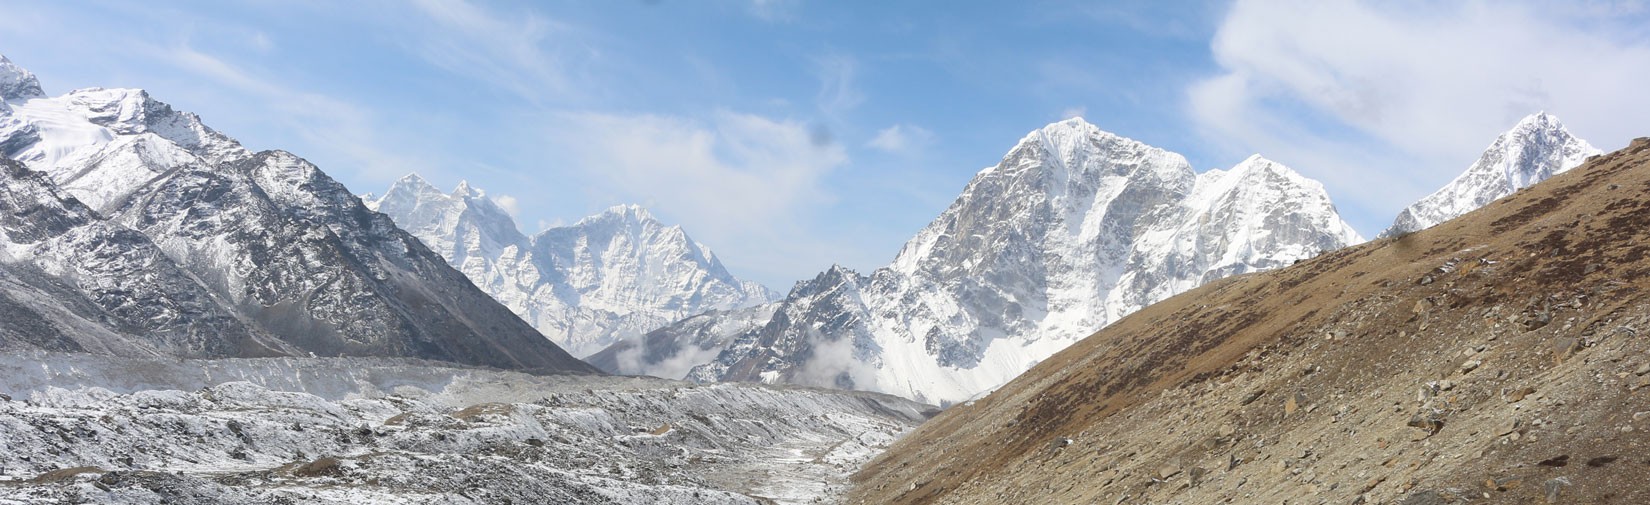 Everest Base Camp trek in Nepal 2022/23